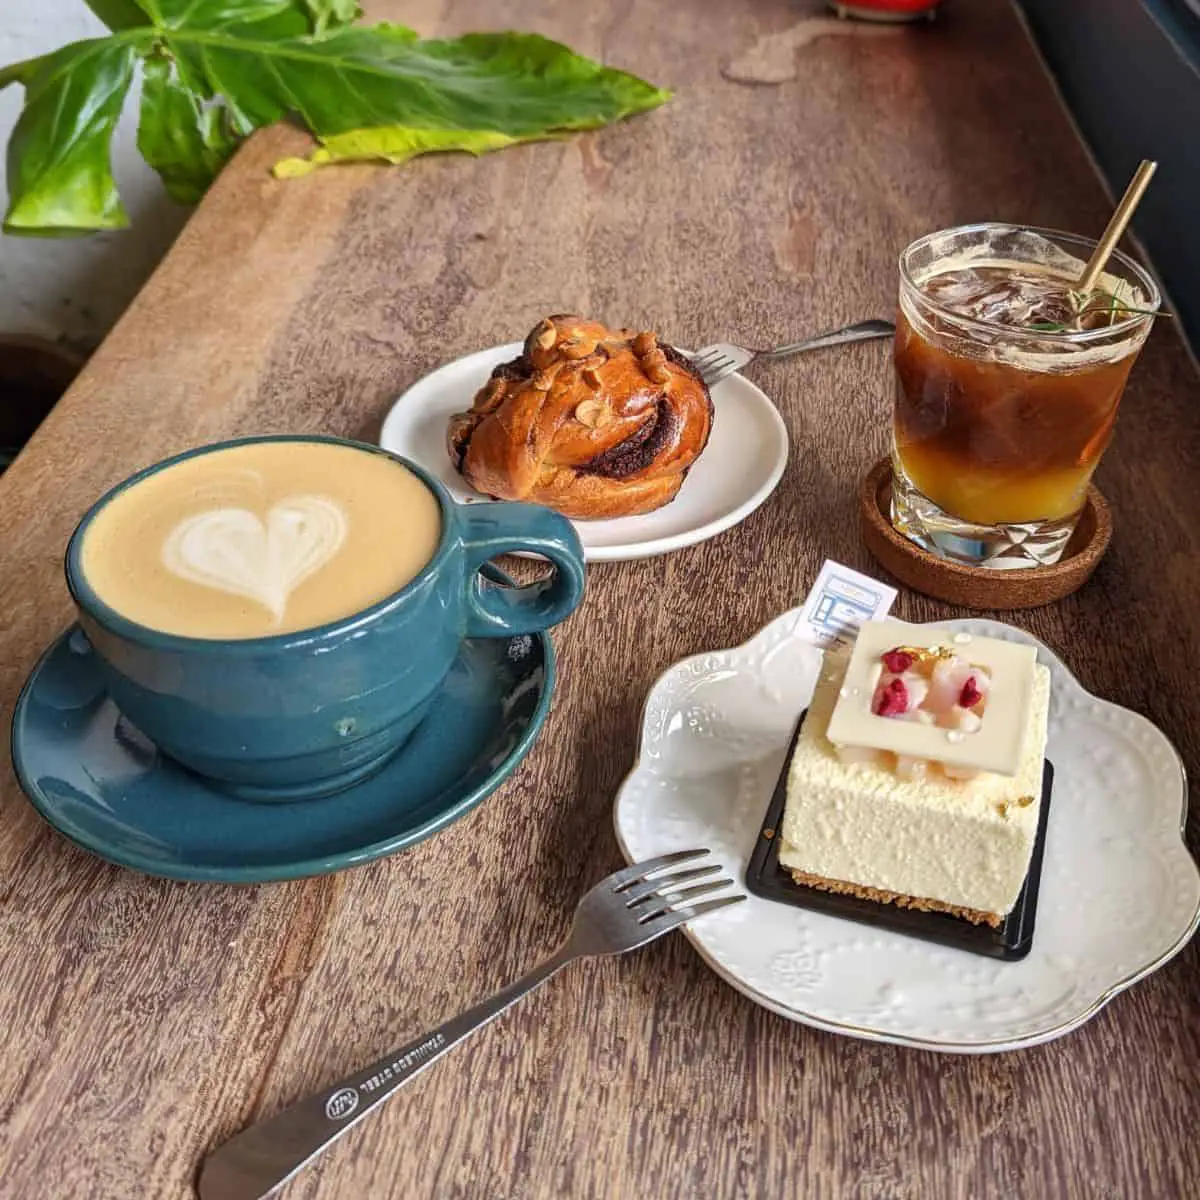 Orange espresso, cafe latte, Enchante cake (lychee syrup and raspberry filling), cinnamon bun at Le petit four patisserie